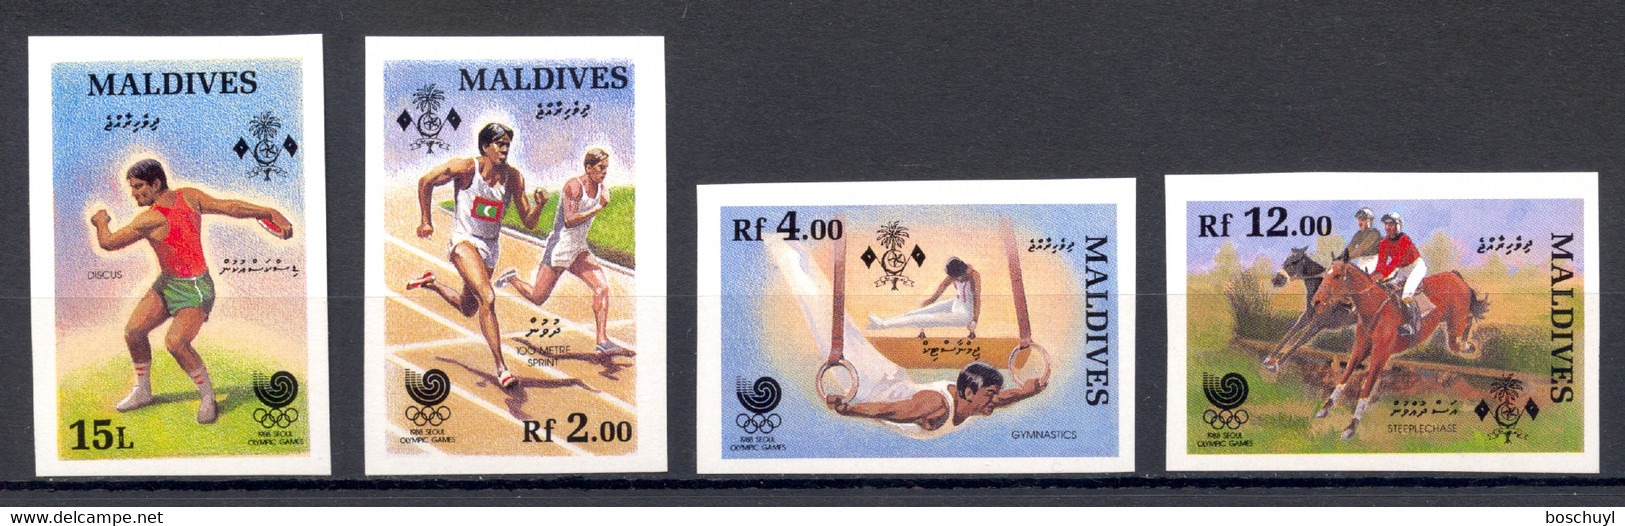 Maldives, 1988, Olympic Summer Games Seoul, Running, Gymnastics, Horse Riding, MNH Imperforated, Michel 1307-1310B - Maldives (...-1965)